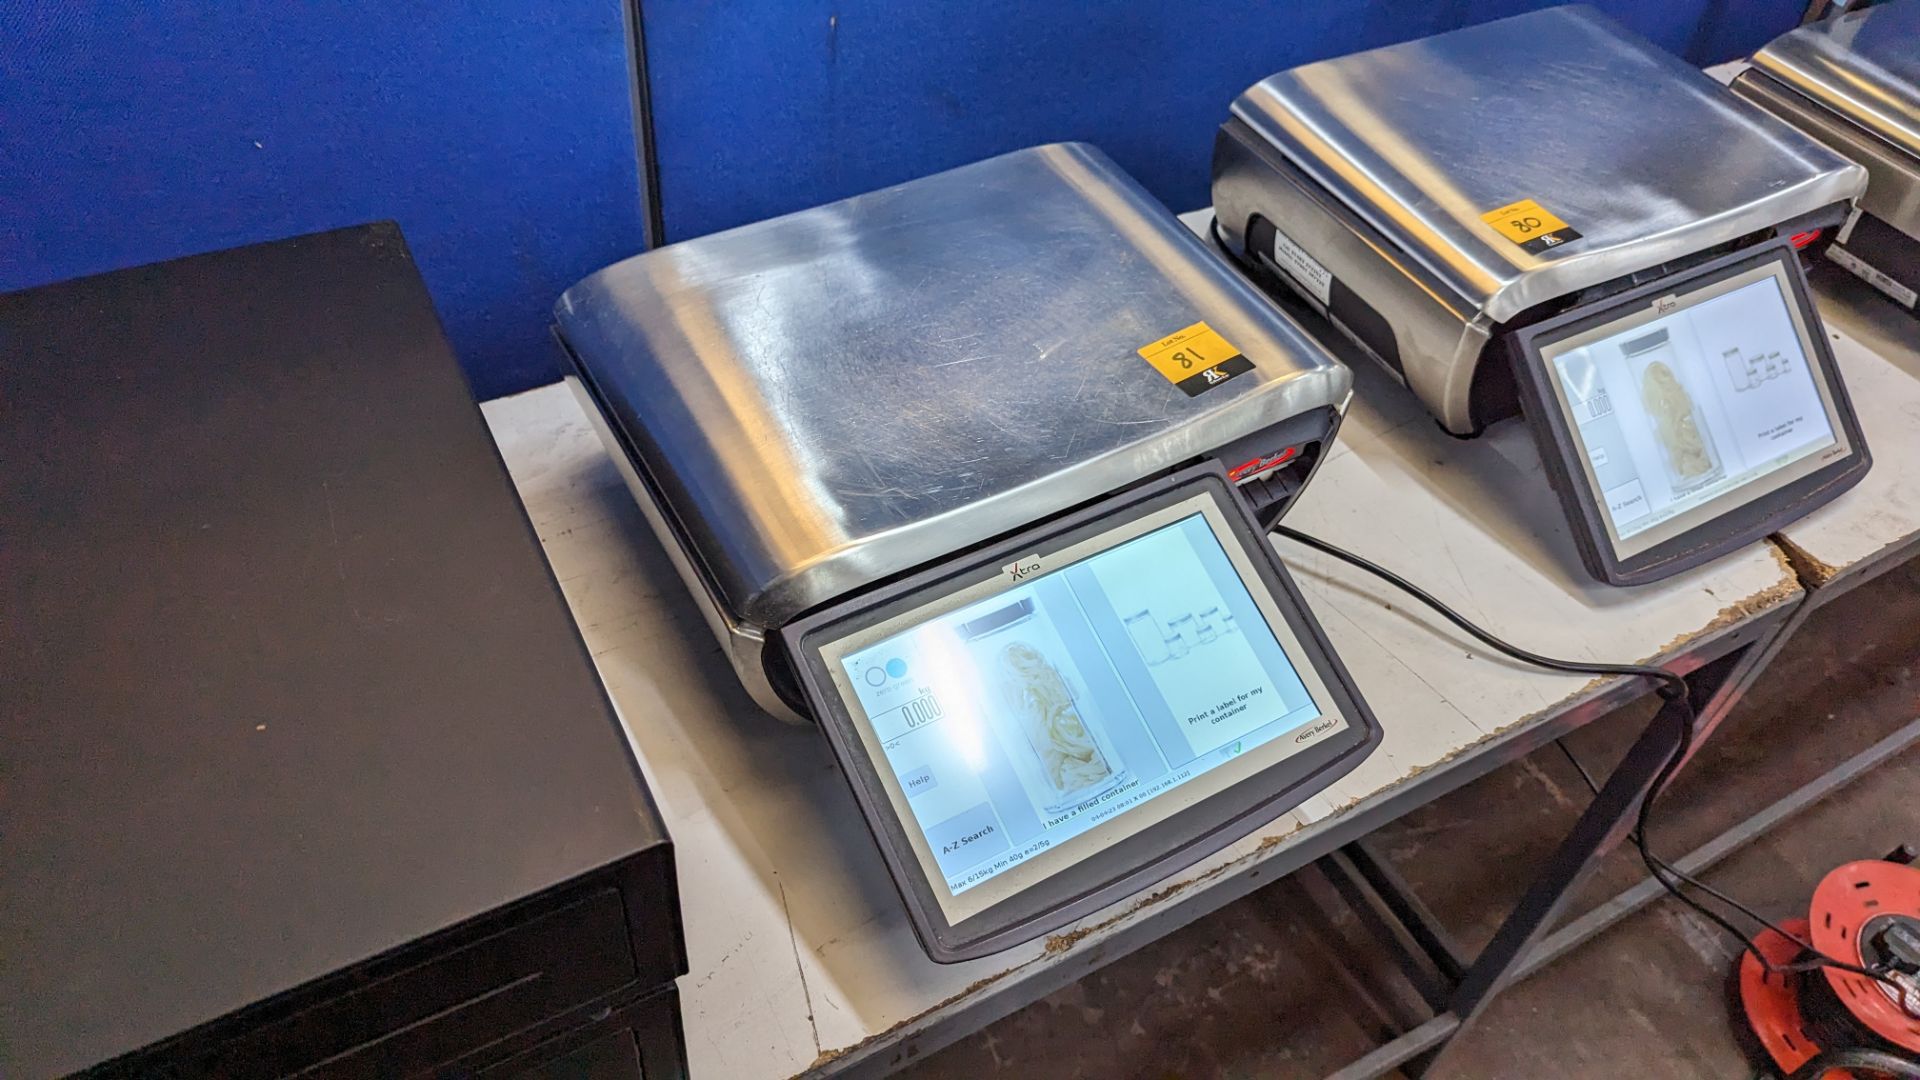 Avery Berkel Xti 100 Label & Receipt printing scale. 6kg/15kg capacity, 10" operator touchscreen dis - Image 5 of 18